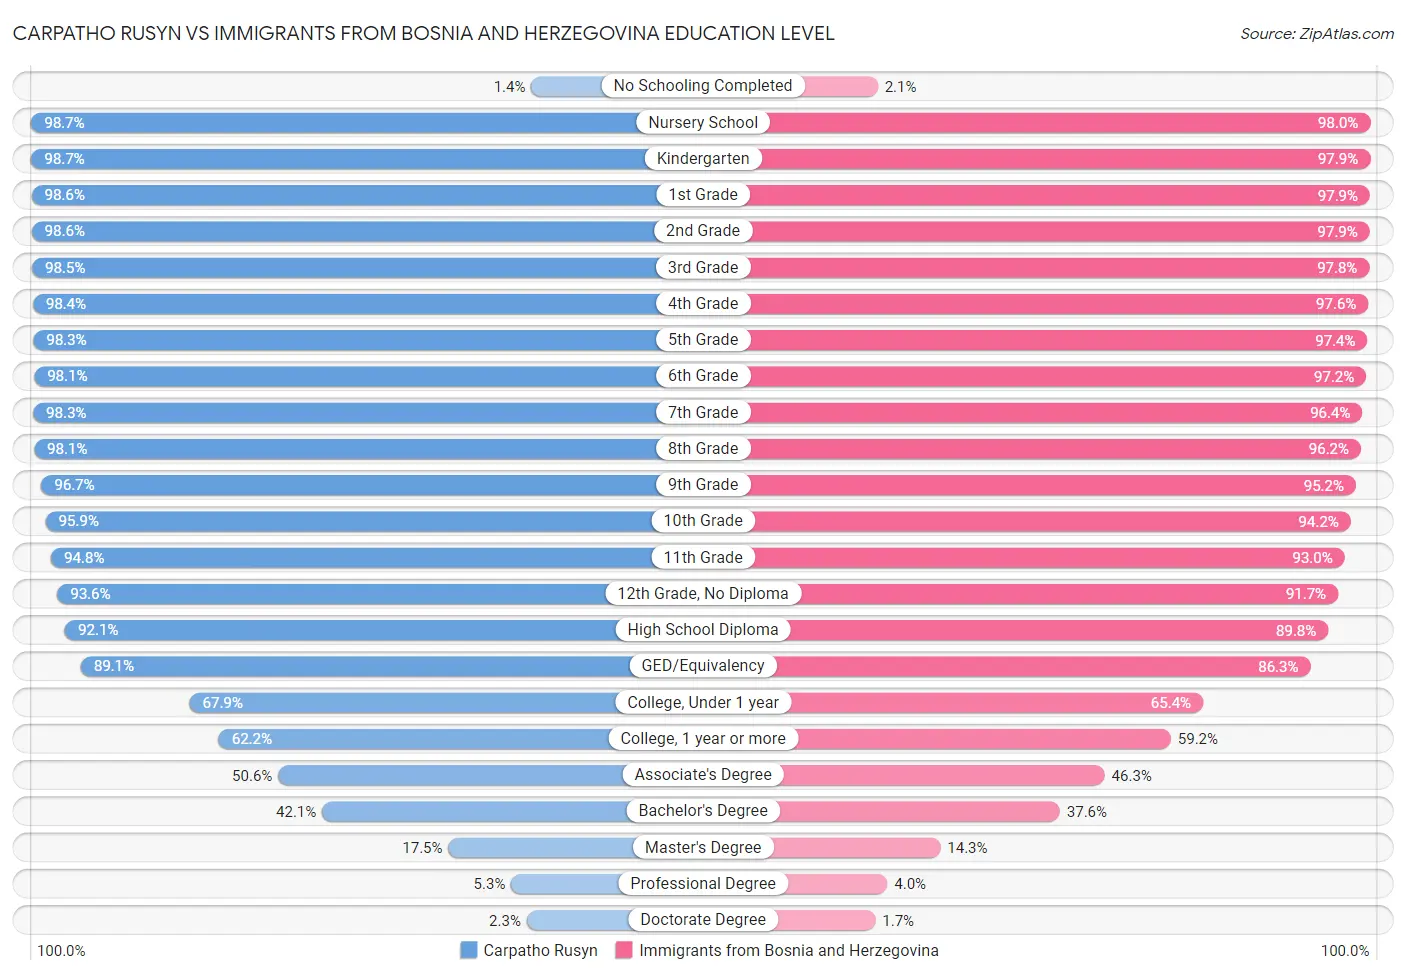 Carpatho Rusyn vs Immigrants from Bosnia and Herzegovina Education Level